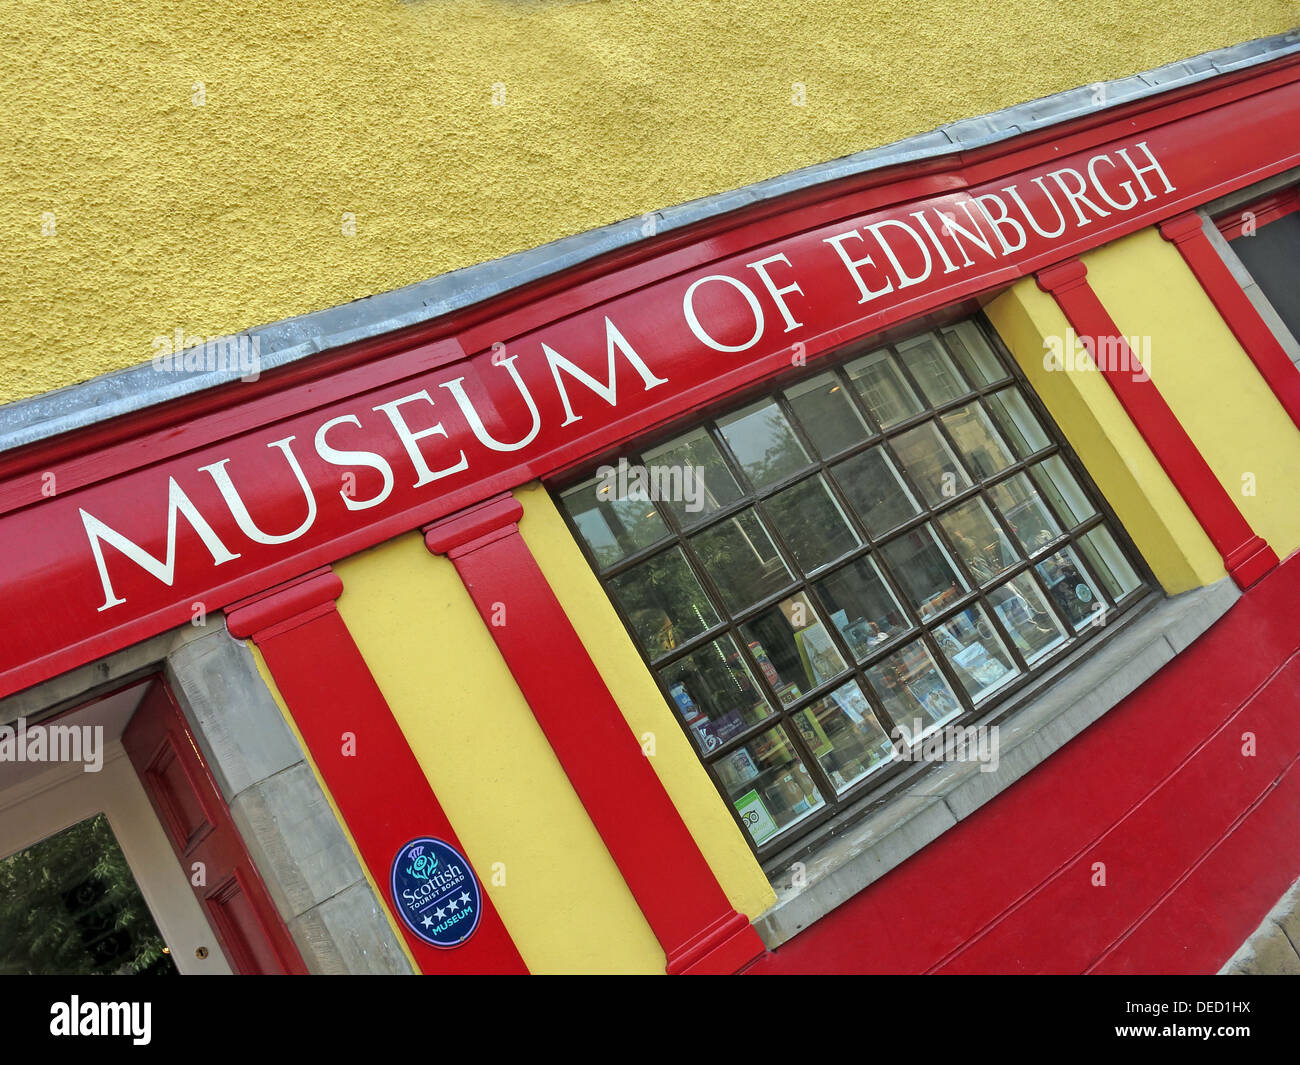 The Museum of Edinburgh Stock Photo